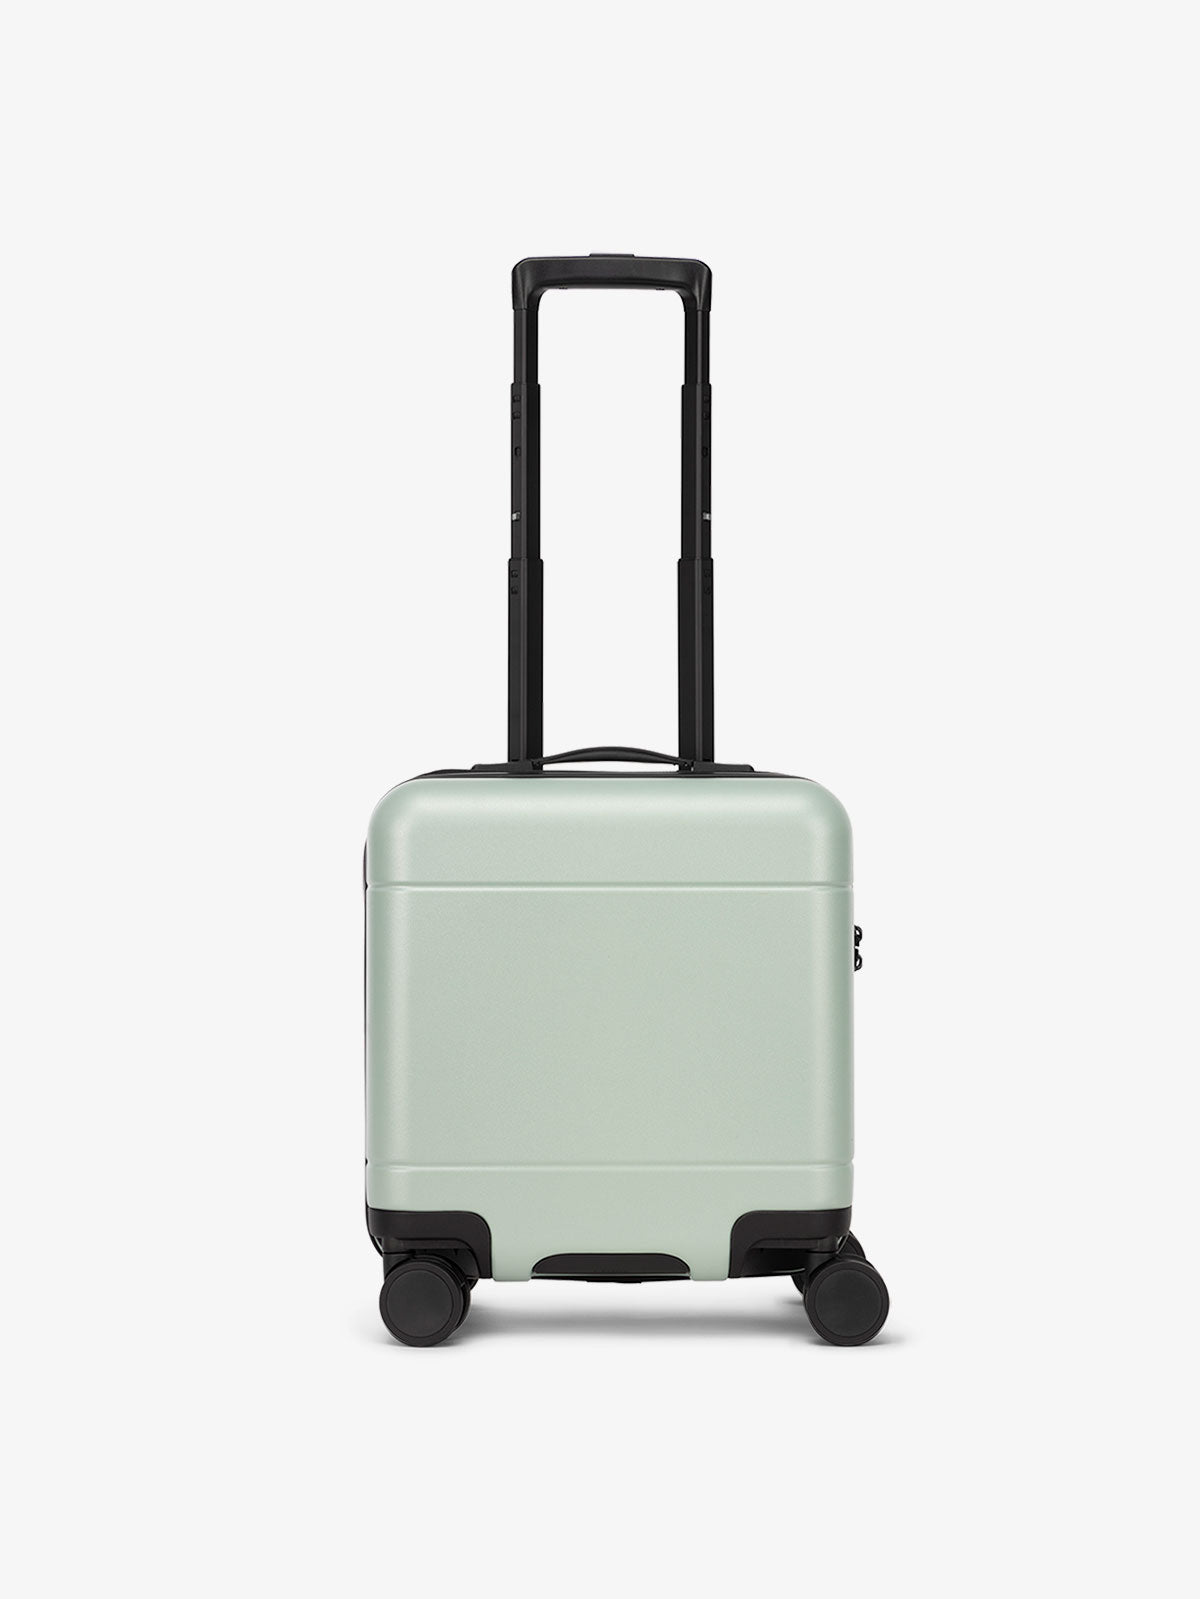 Hue mini carry on luggage in jade green